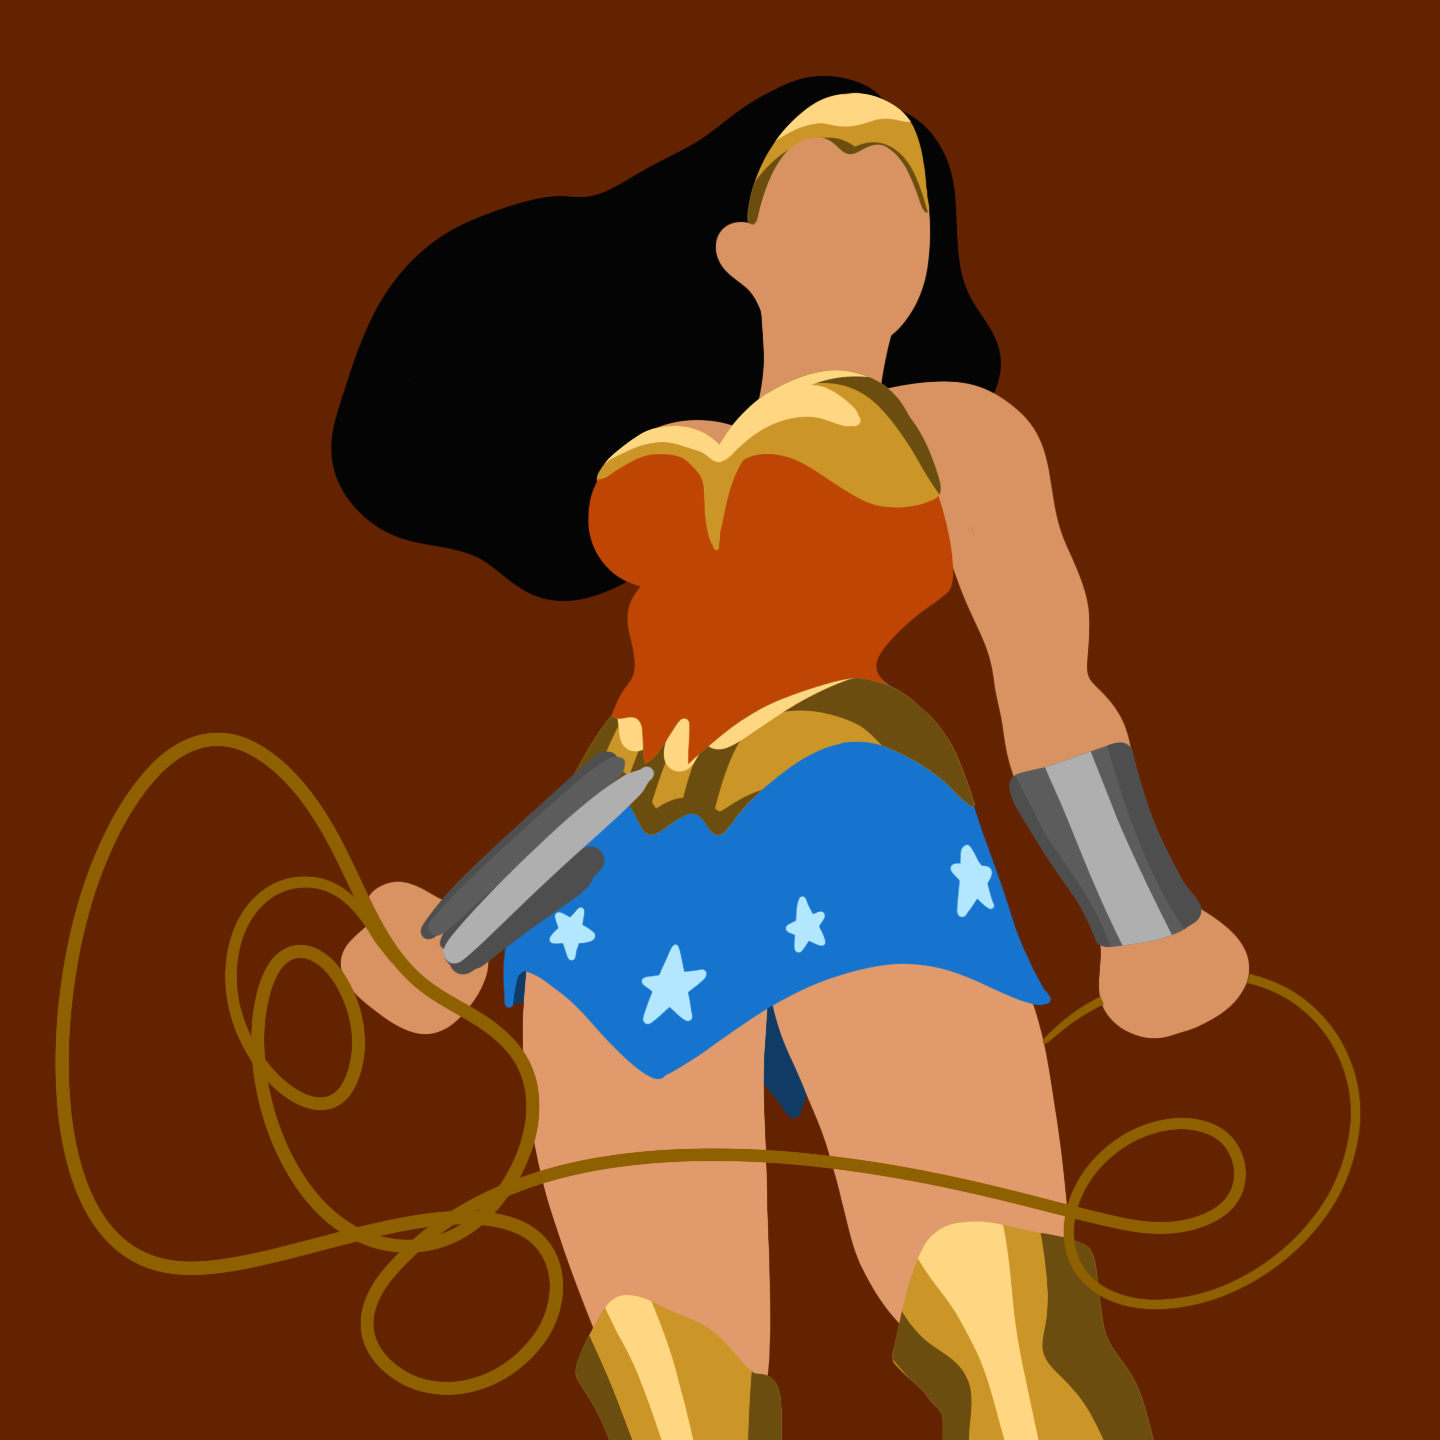 Wonder Woman Illustration by Reb Czukoski for use by 360 Magazine